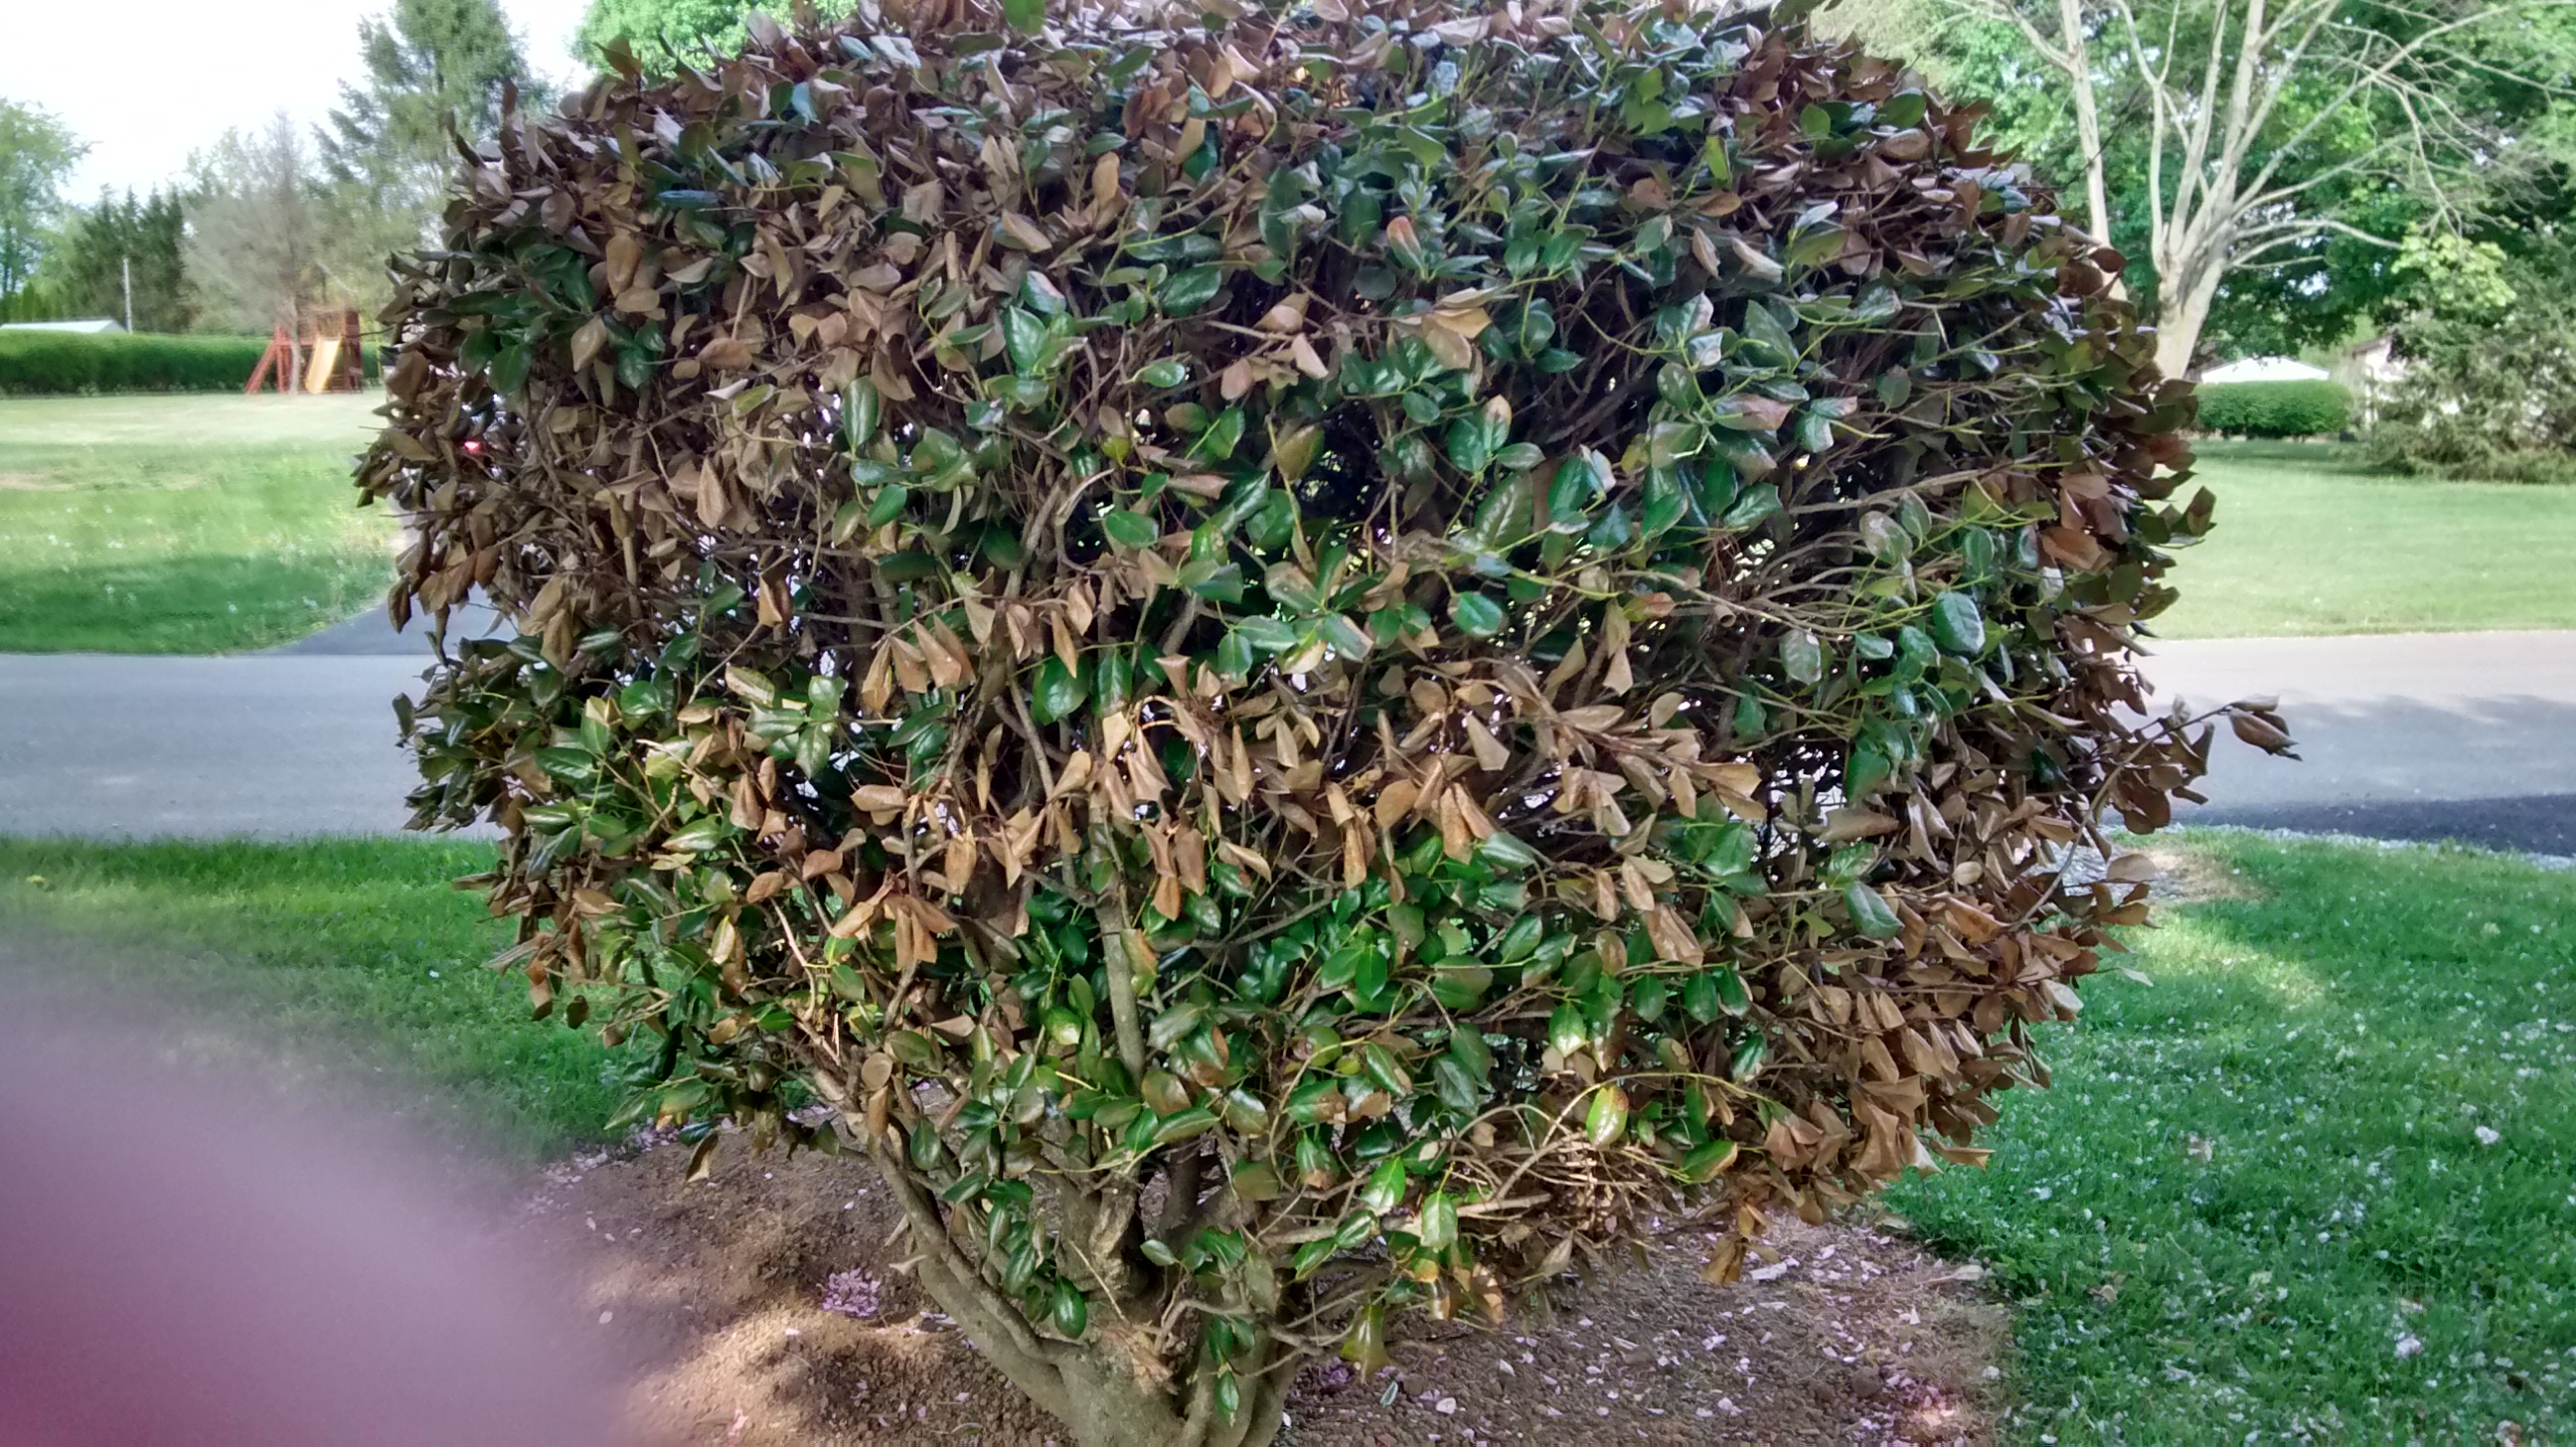 Holly bush damage - Ask an Expert